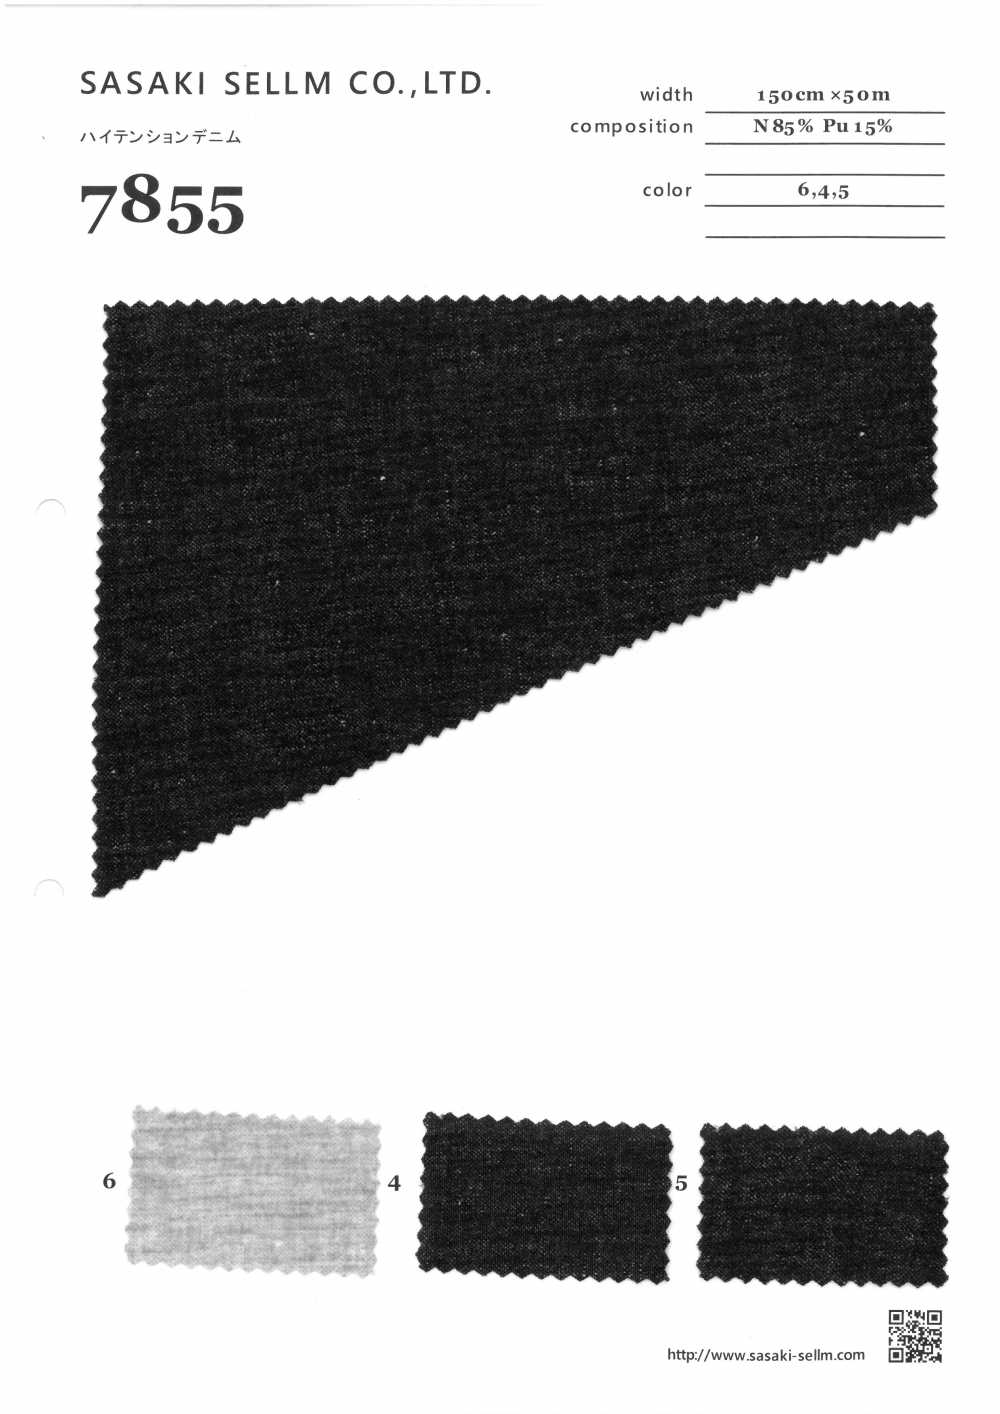 7855 Verano Denim[Fabrica Textil] SASAKISELLM